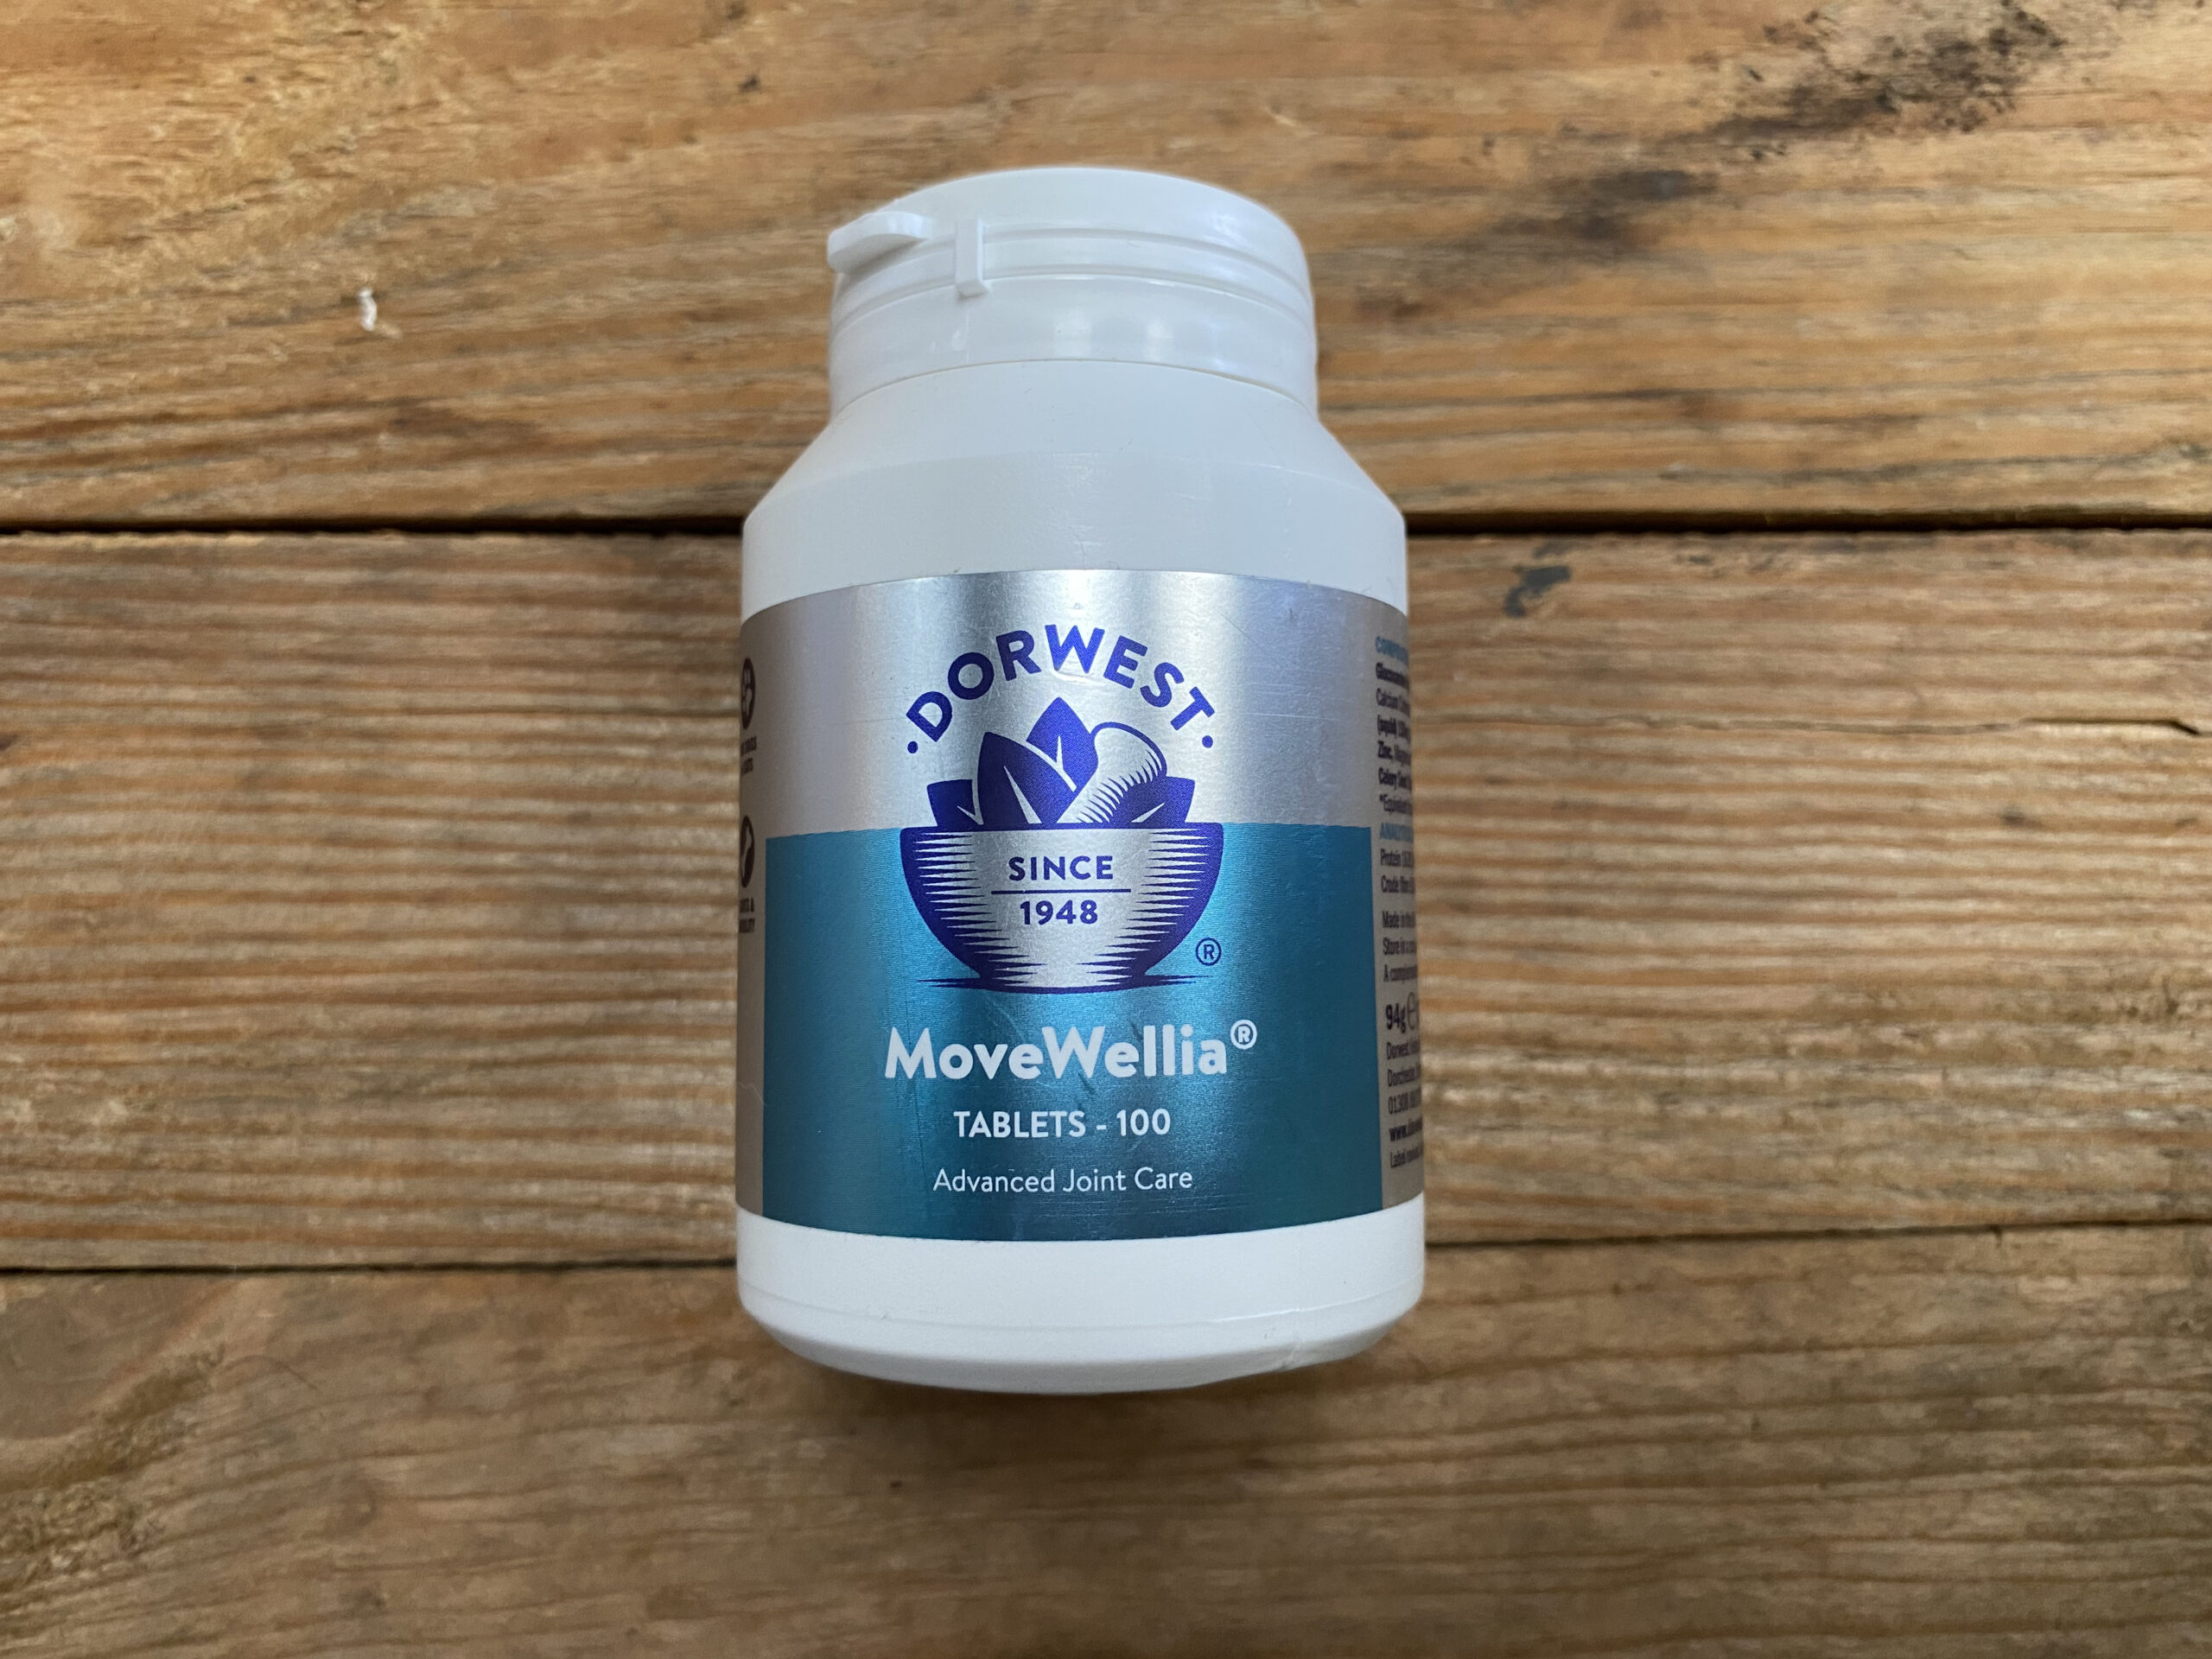 Dorwest MoveWellia Tablets – 100